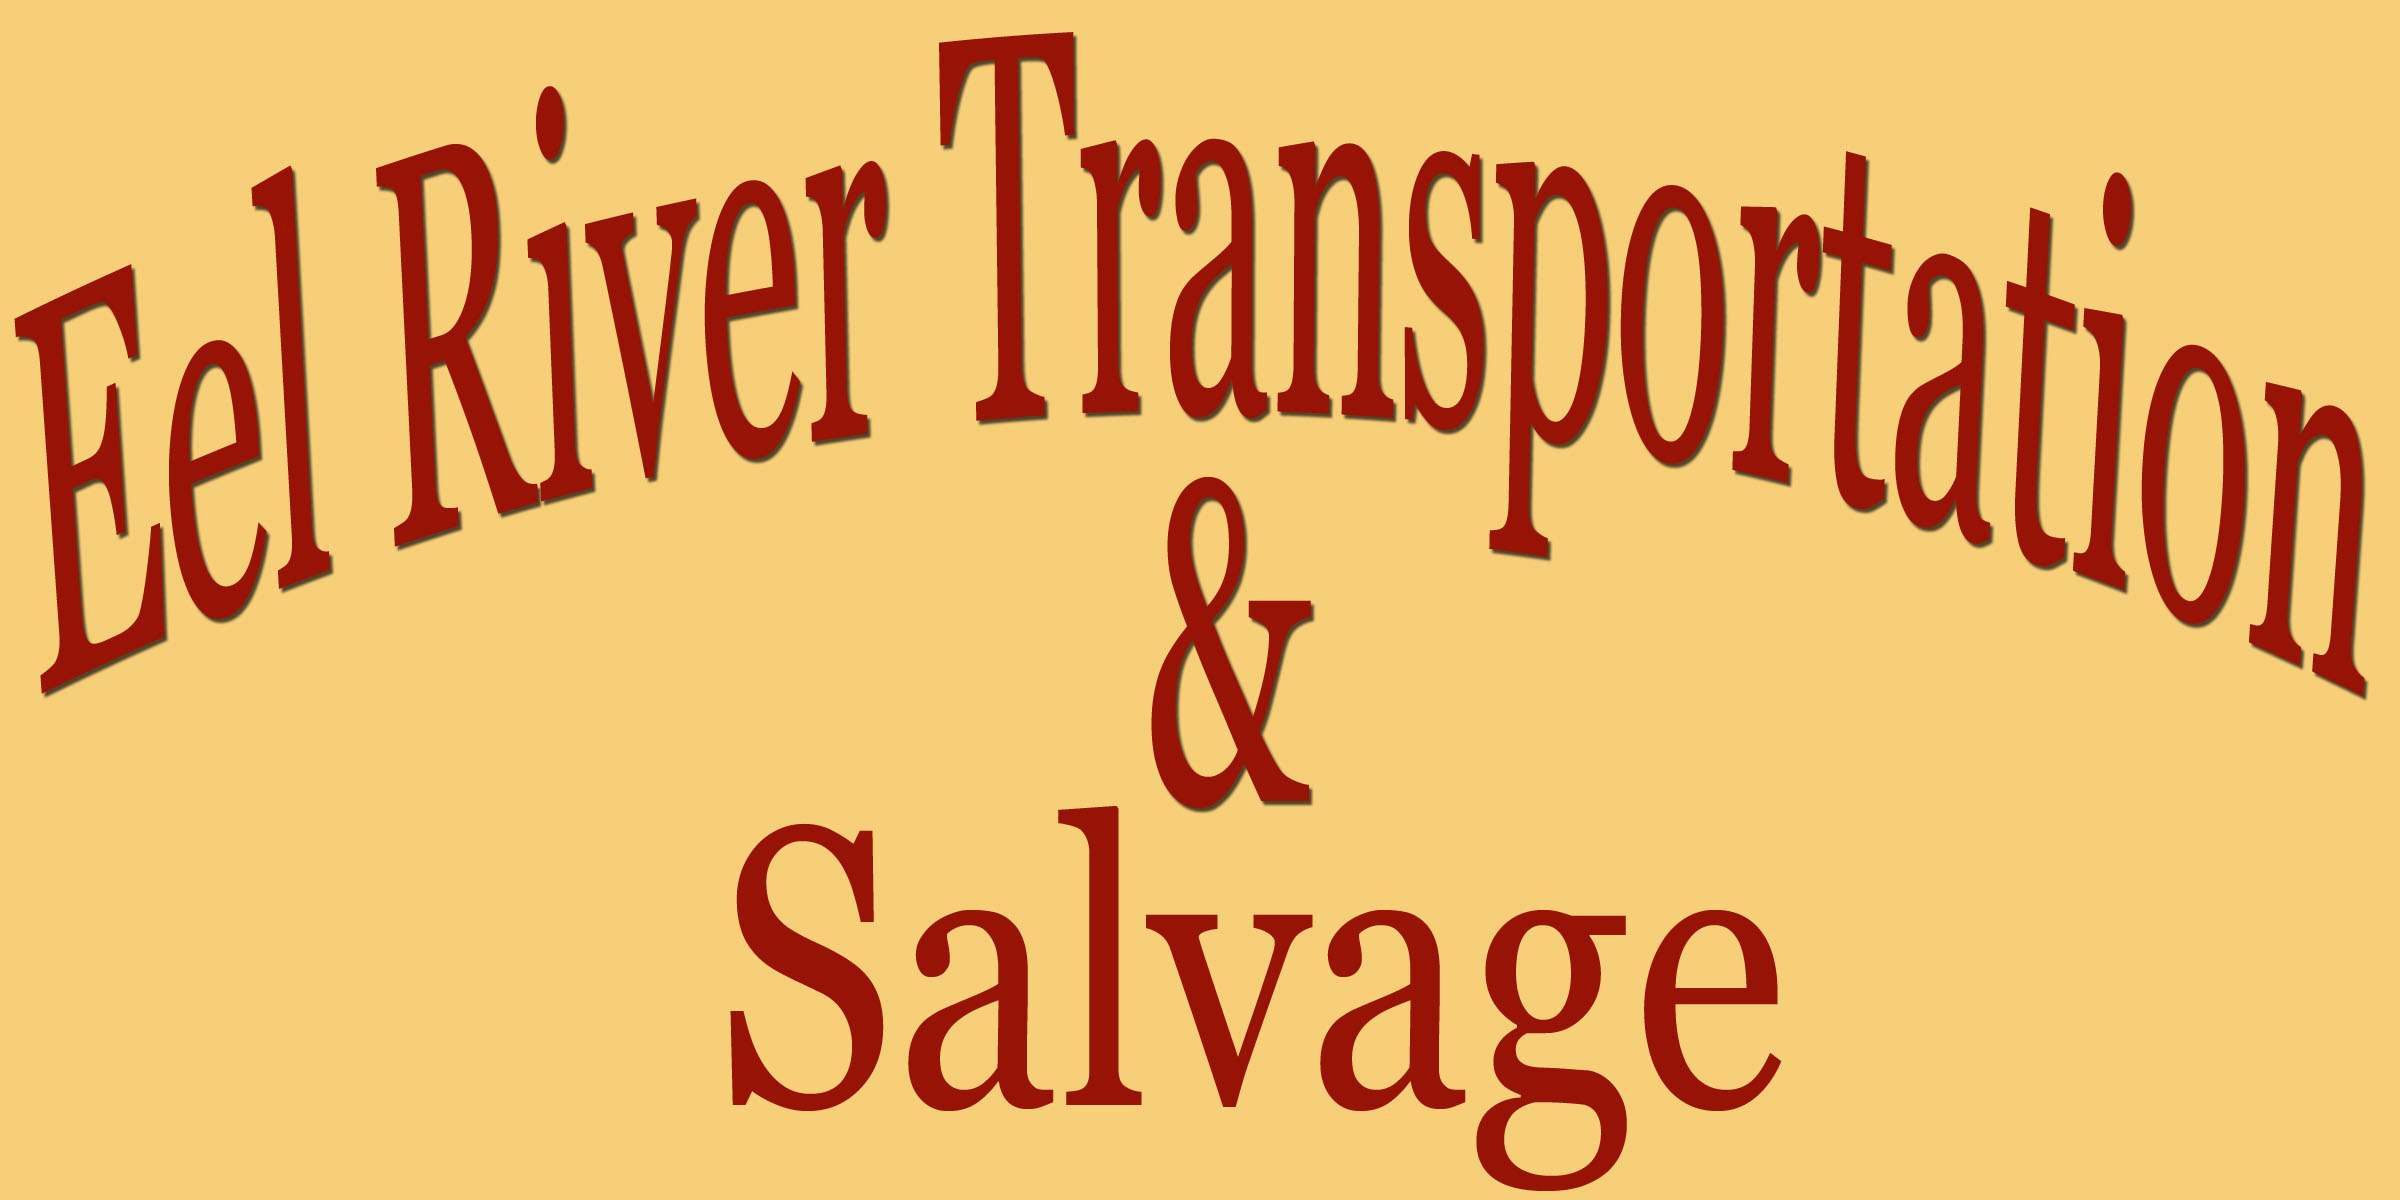 Eel River Transportation & Salvage